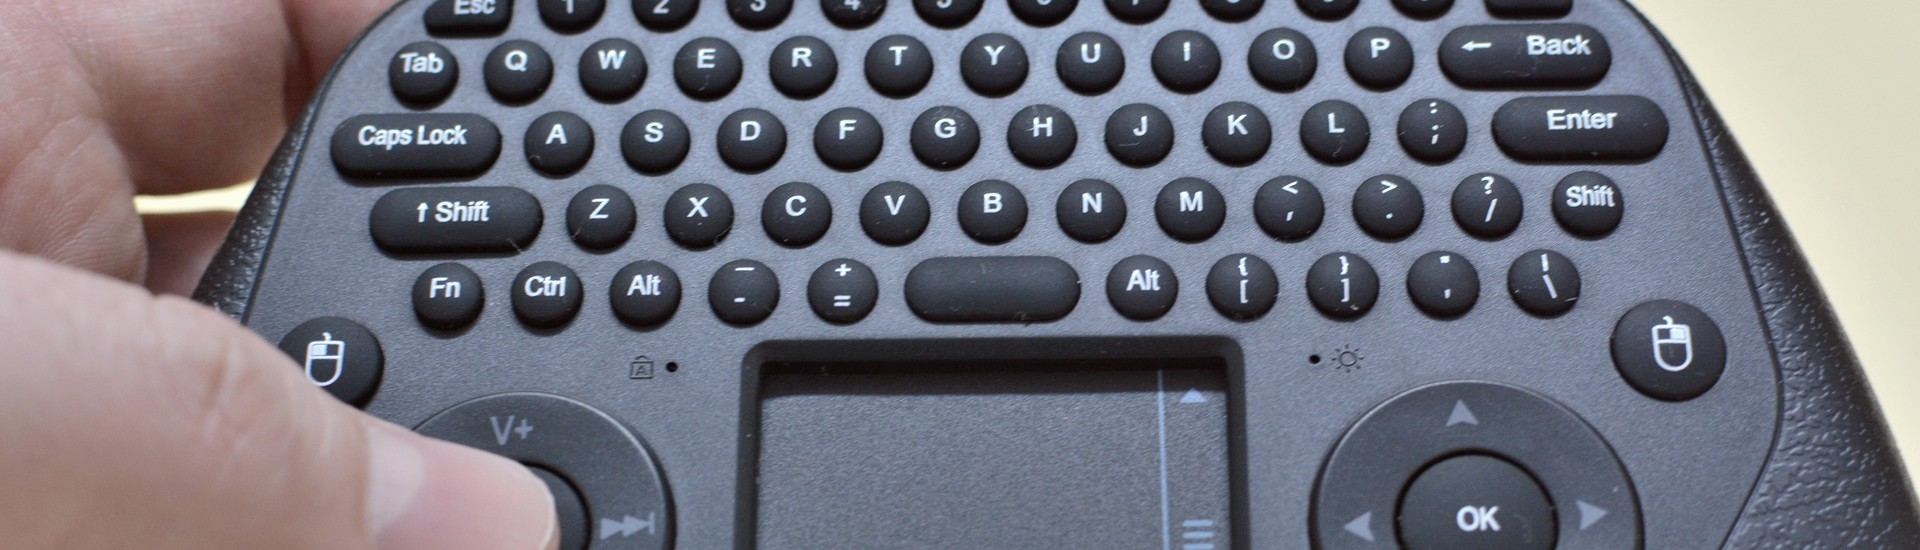 Mini tastatura